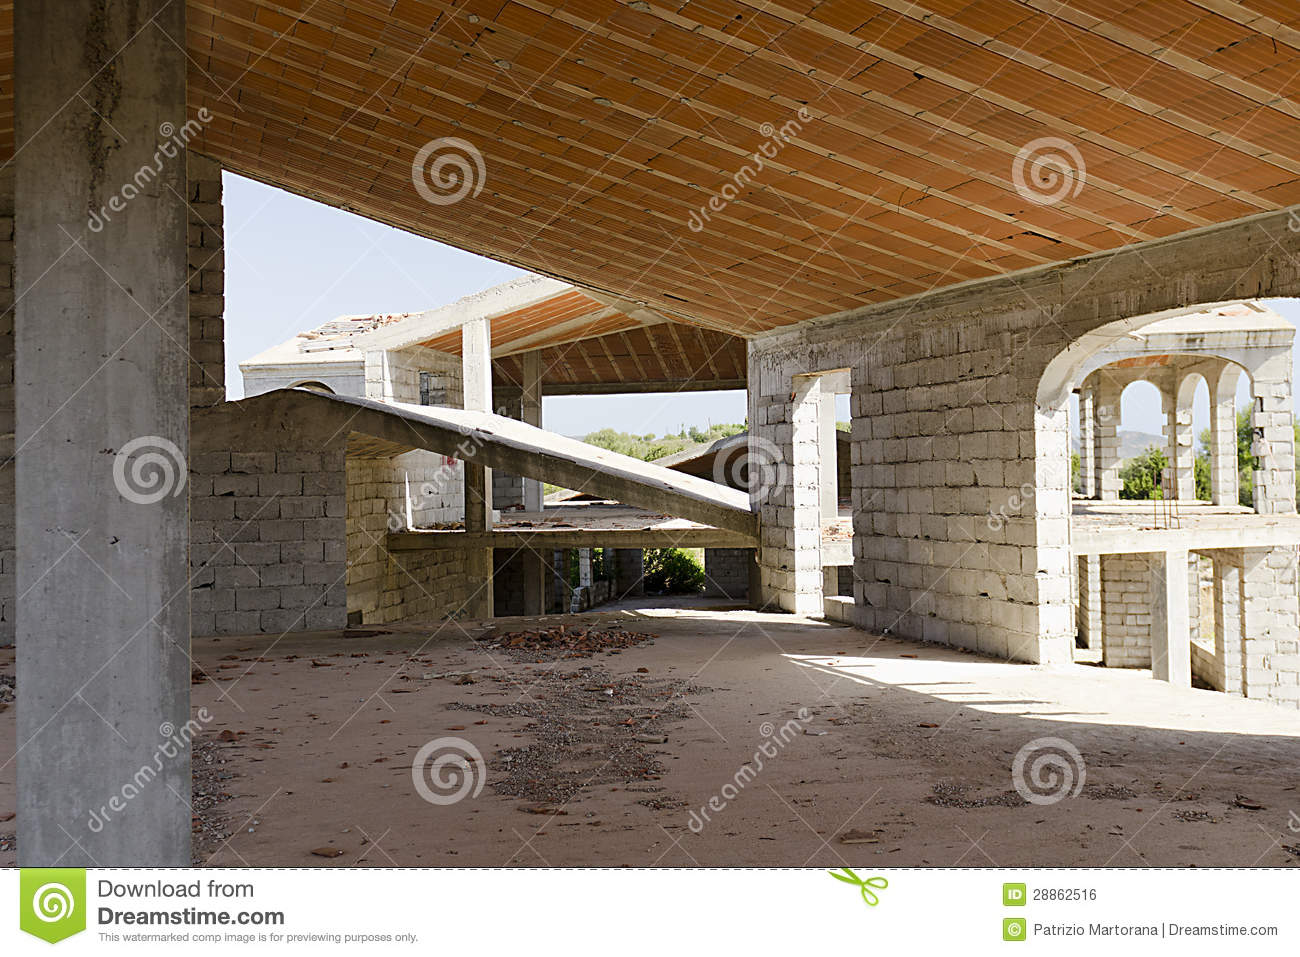 House Under Construction With Reinforced Concrete Columns And Concrete